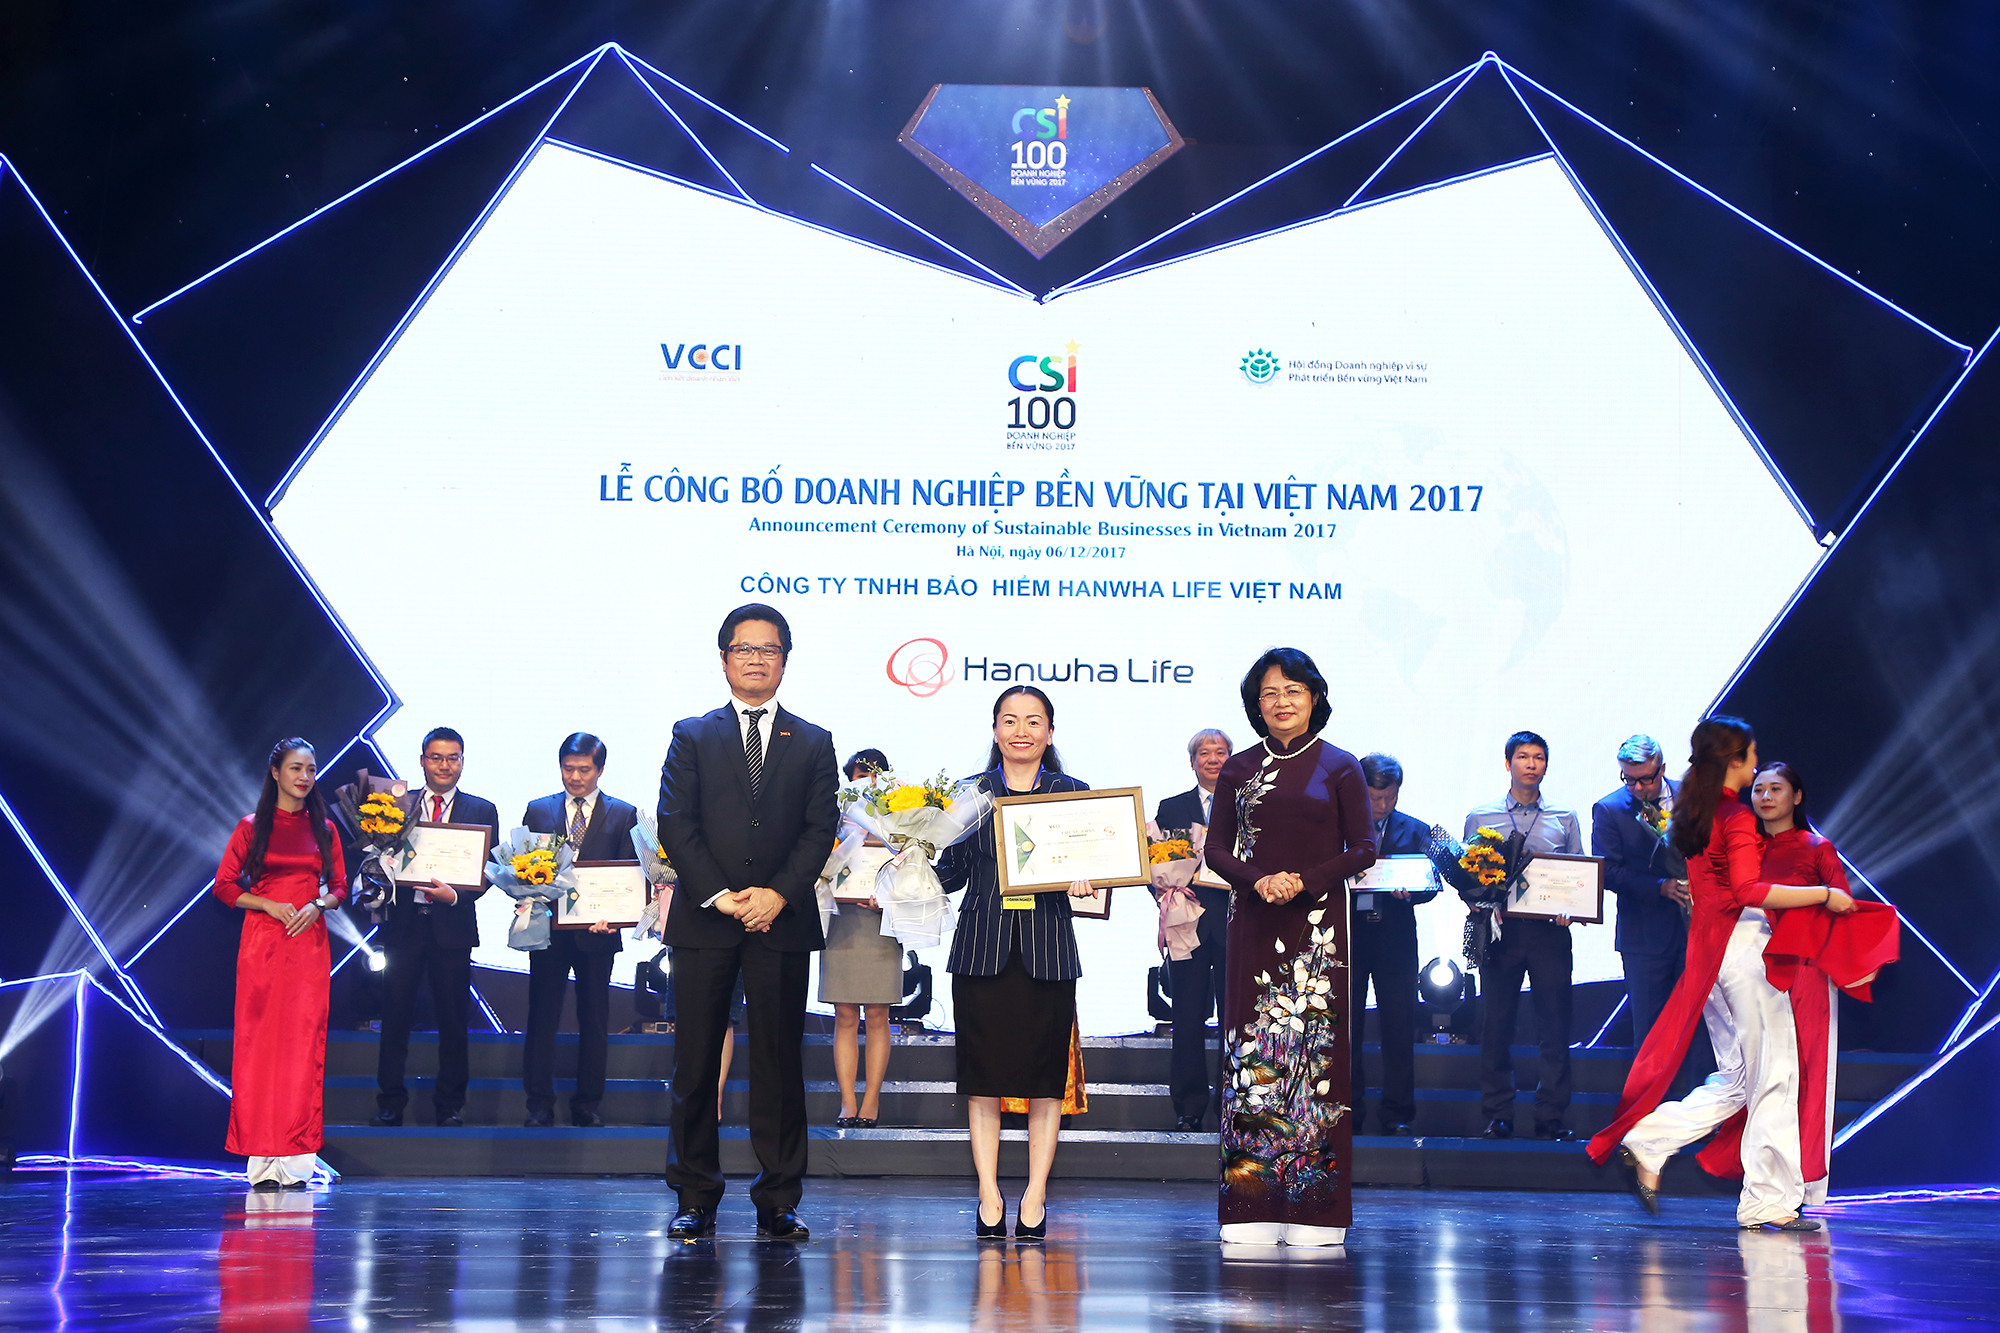 Hanwha Life Vietnam among Vietnam’s Top 10 sustainable businesses